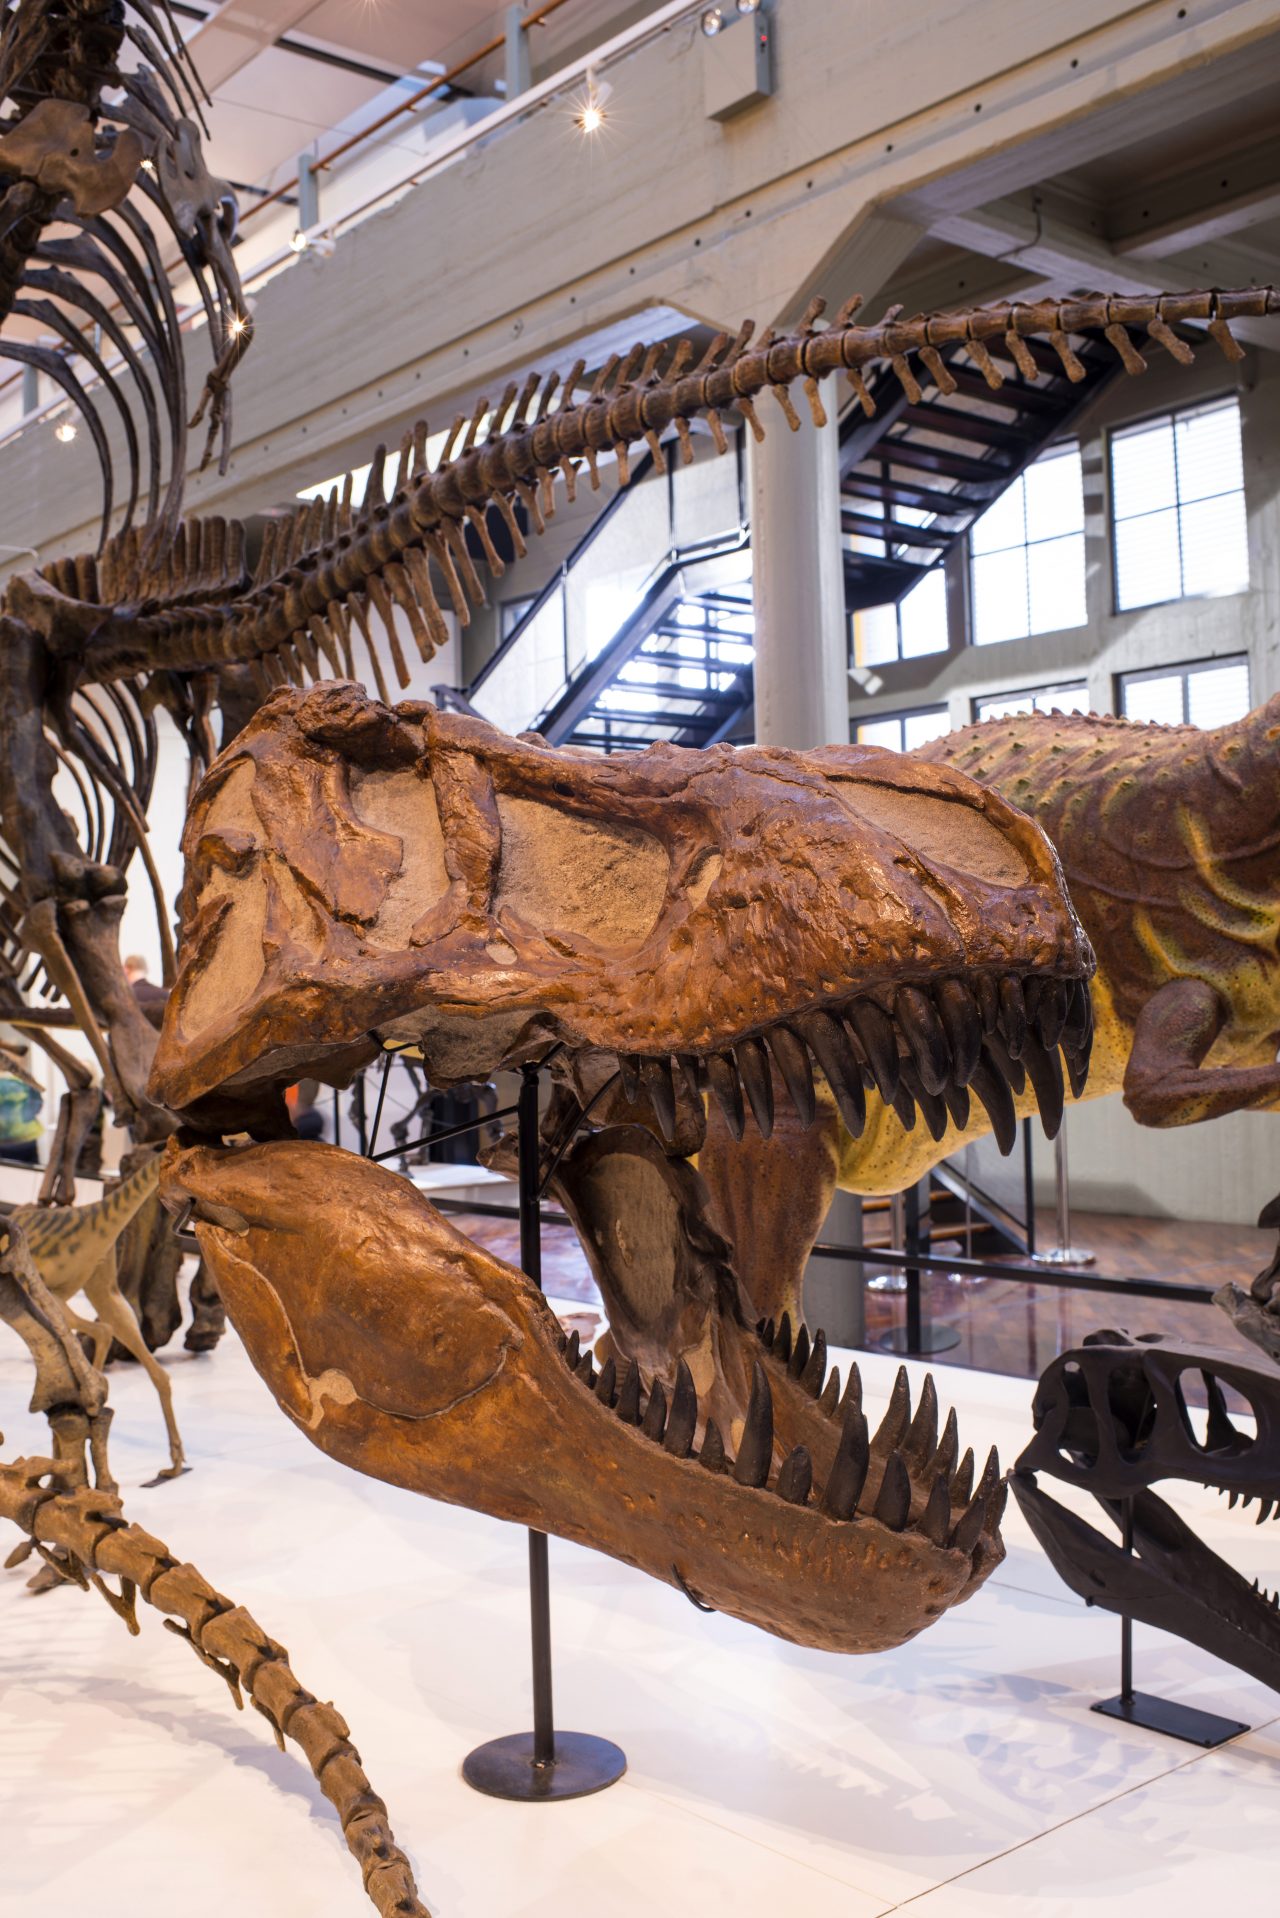 a close up of dinosaur bones in a museum.